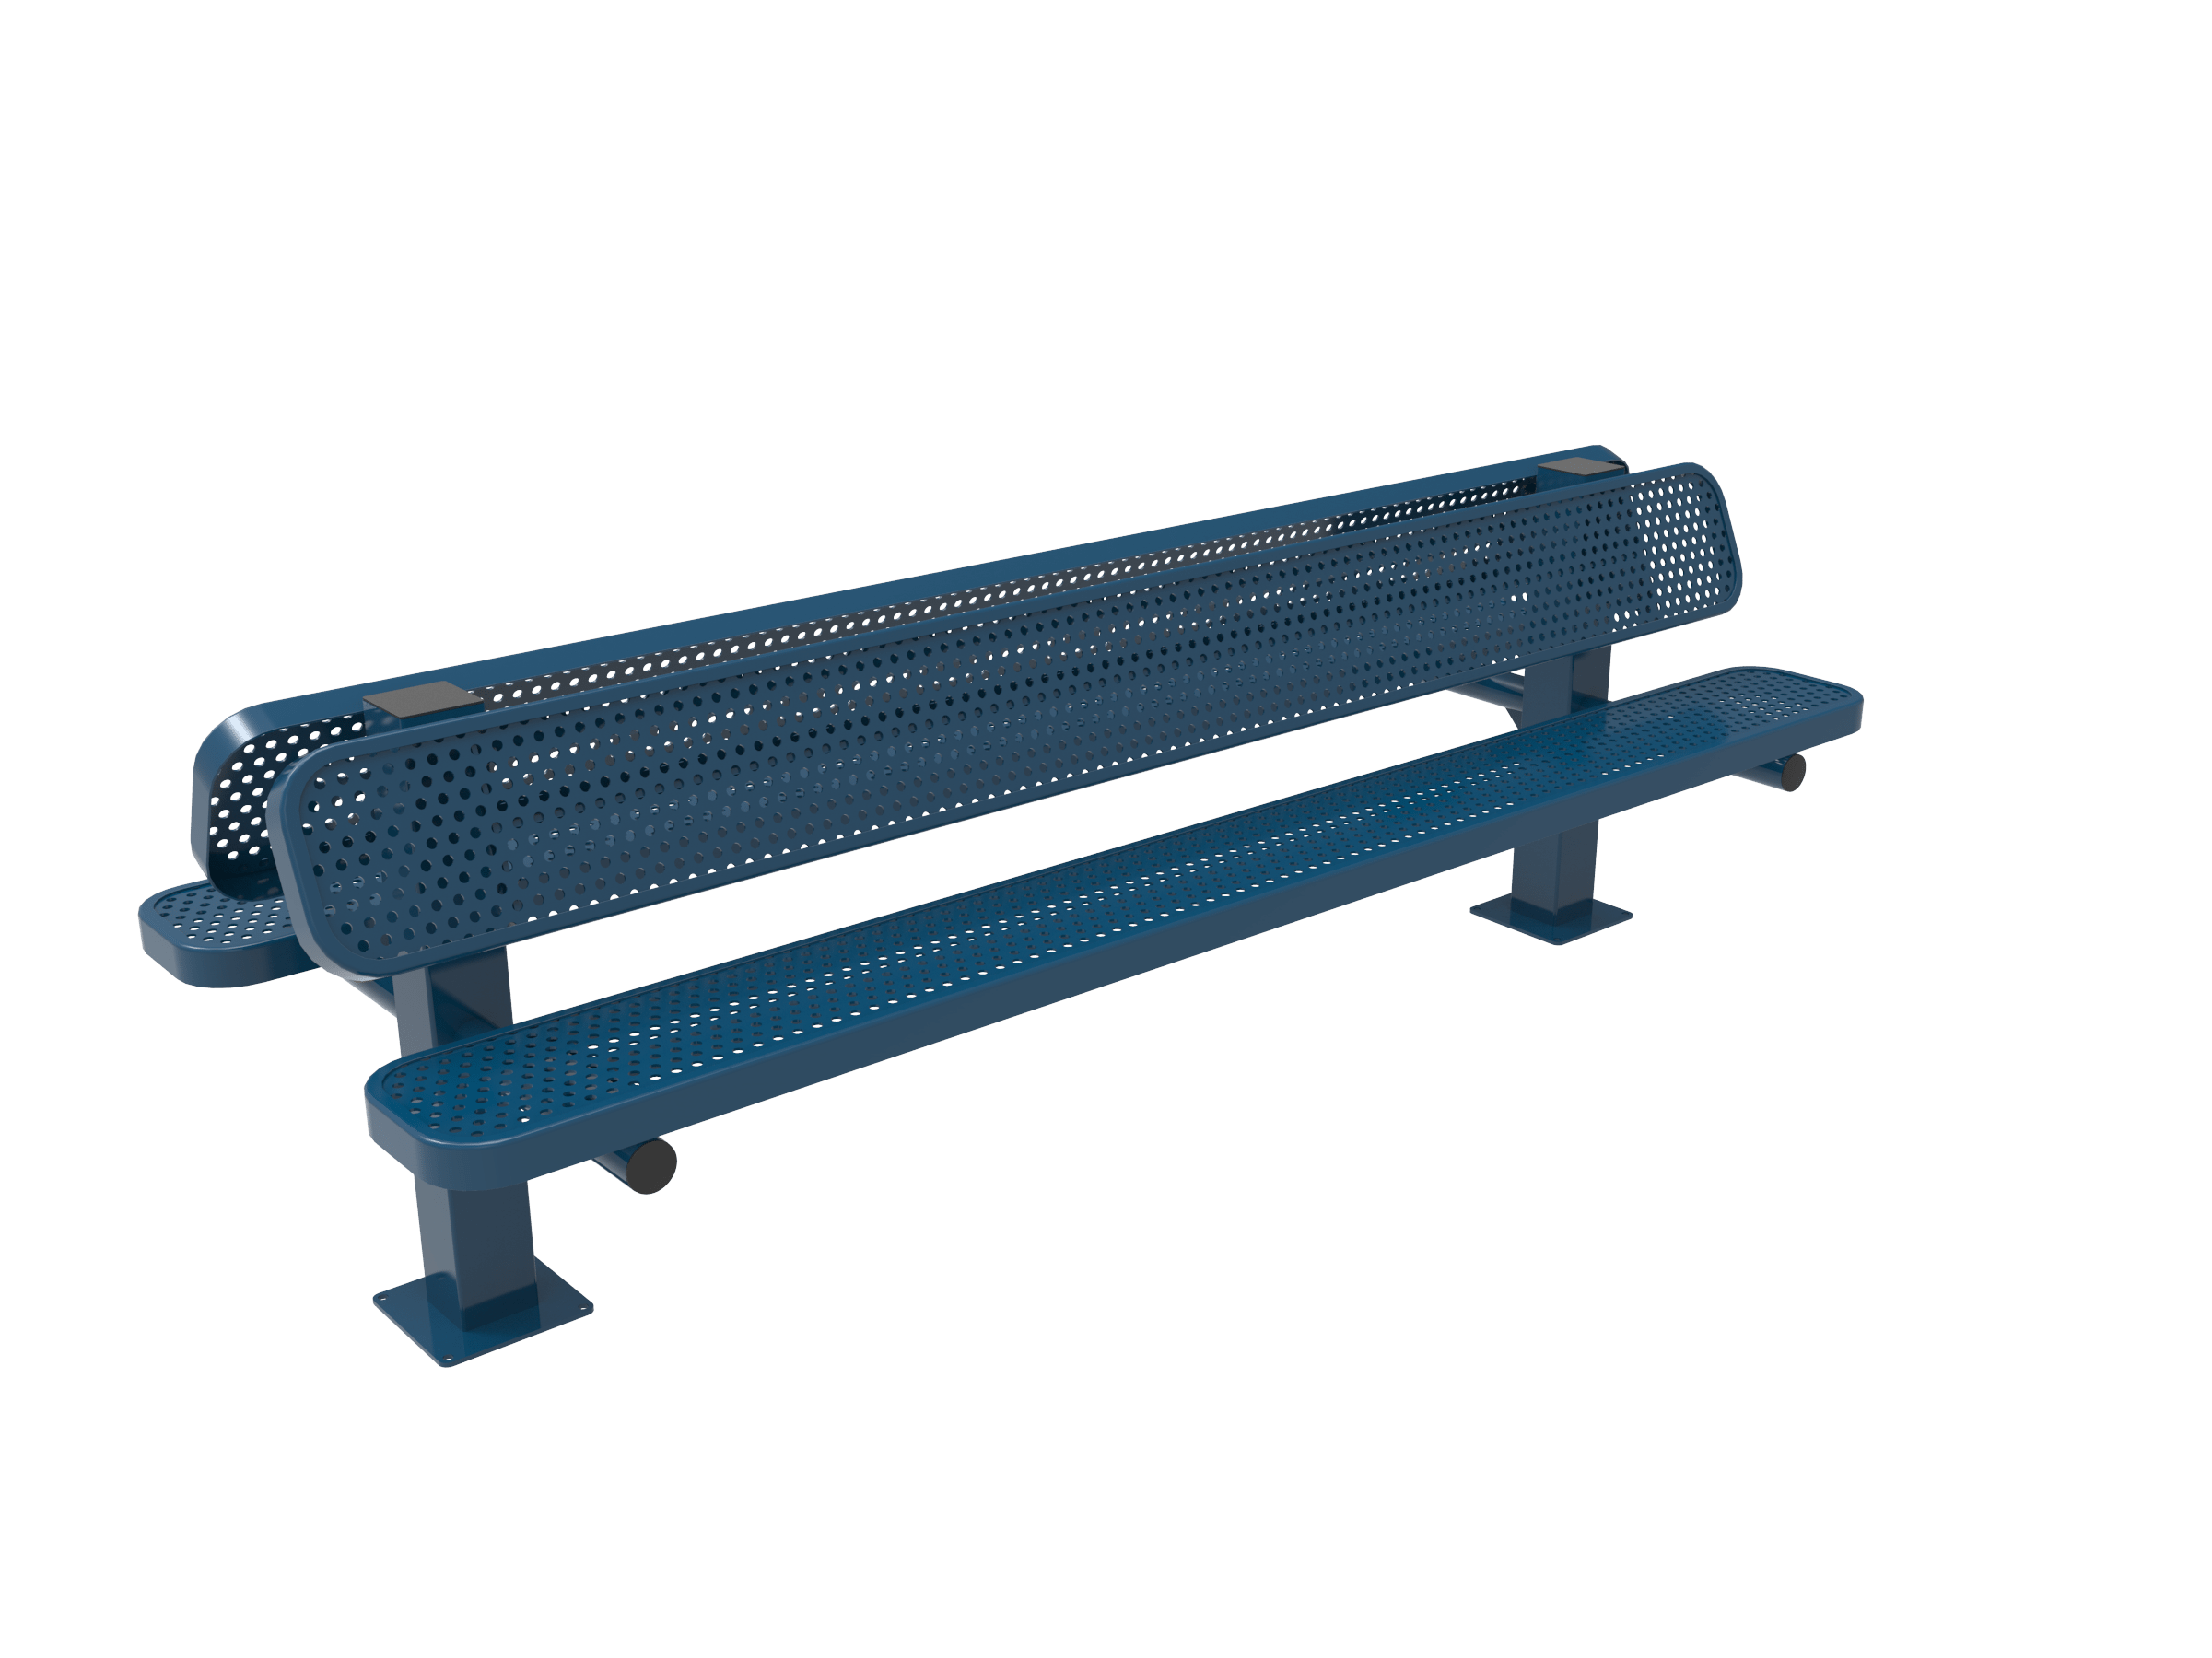 8′ Double Pedestal Bench-Punched
BRT08-D-62-002
Industry Standard Finish
$1449.00
BRT08-B-62-002
Advantage Premium Finish
$1809.00
